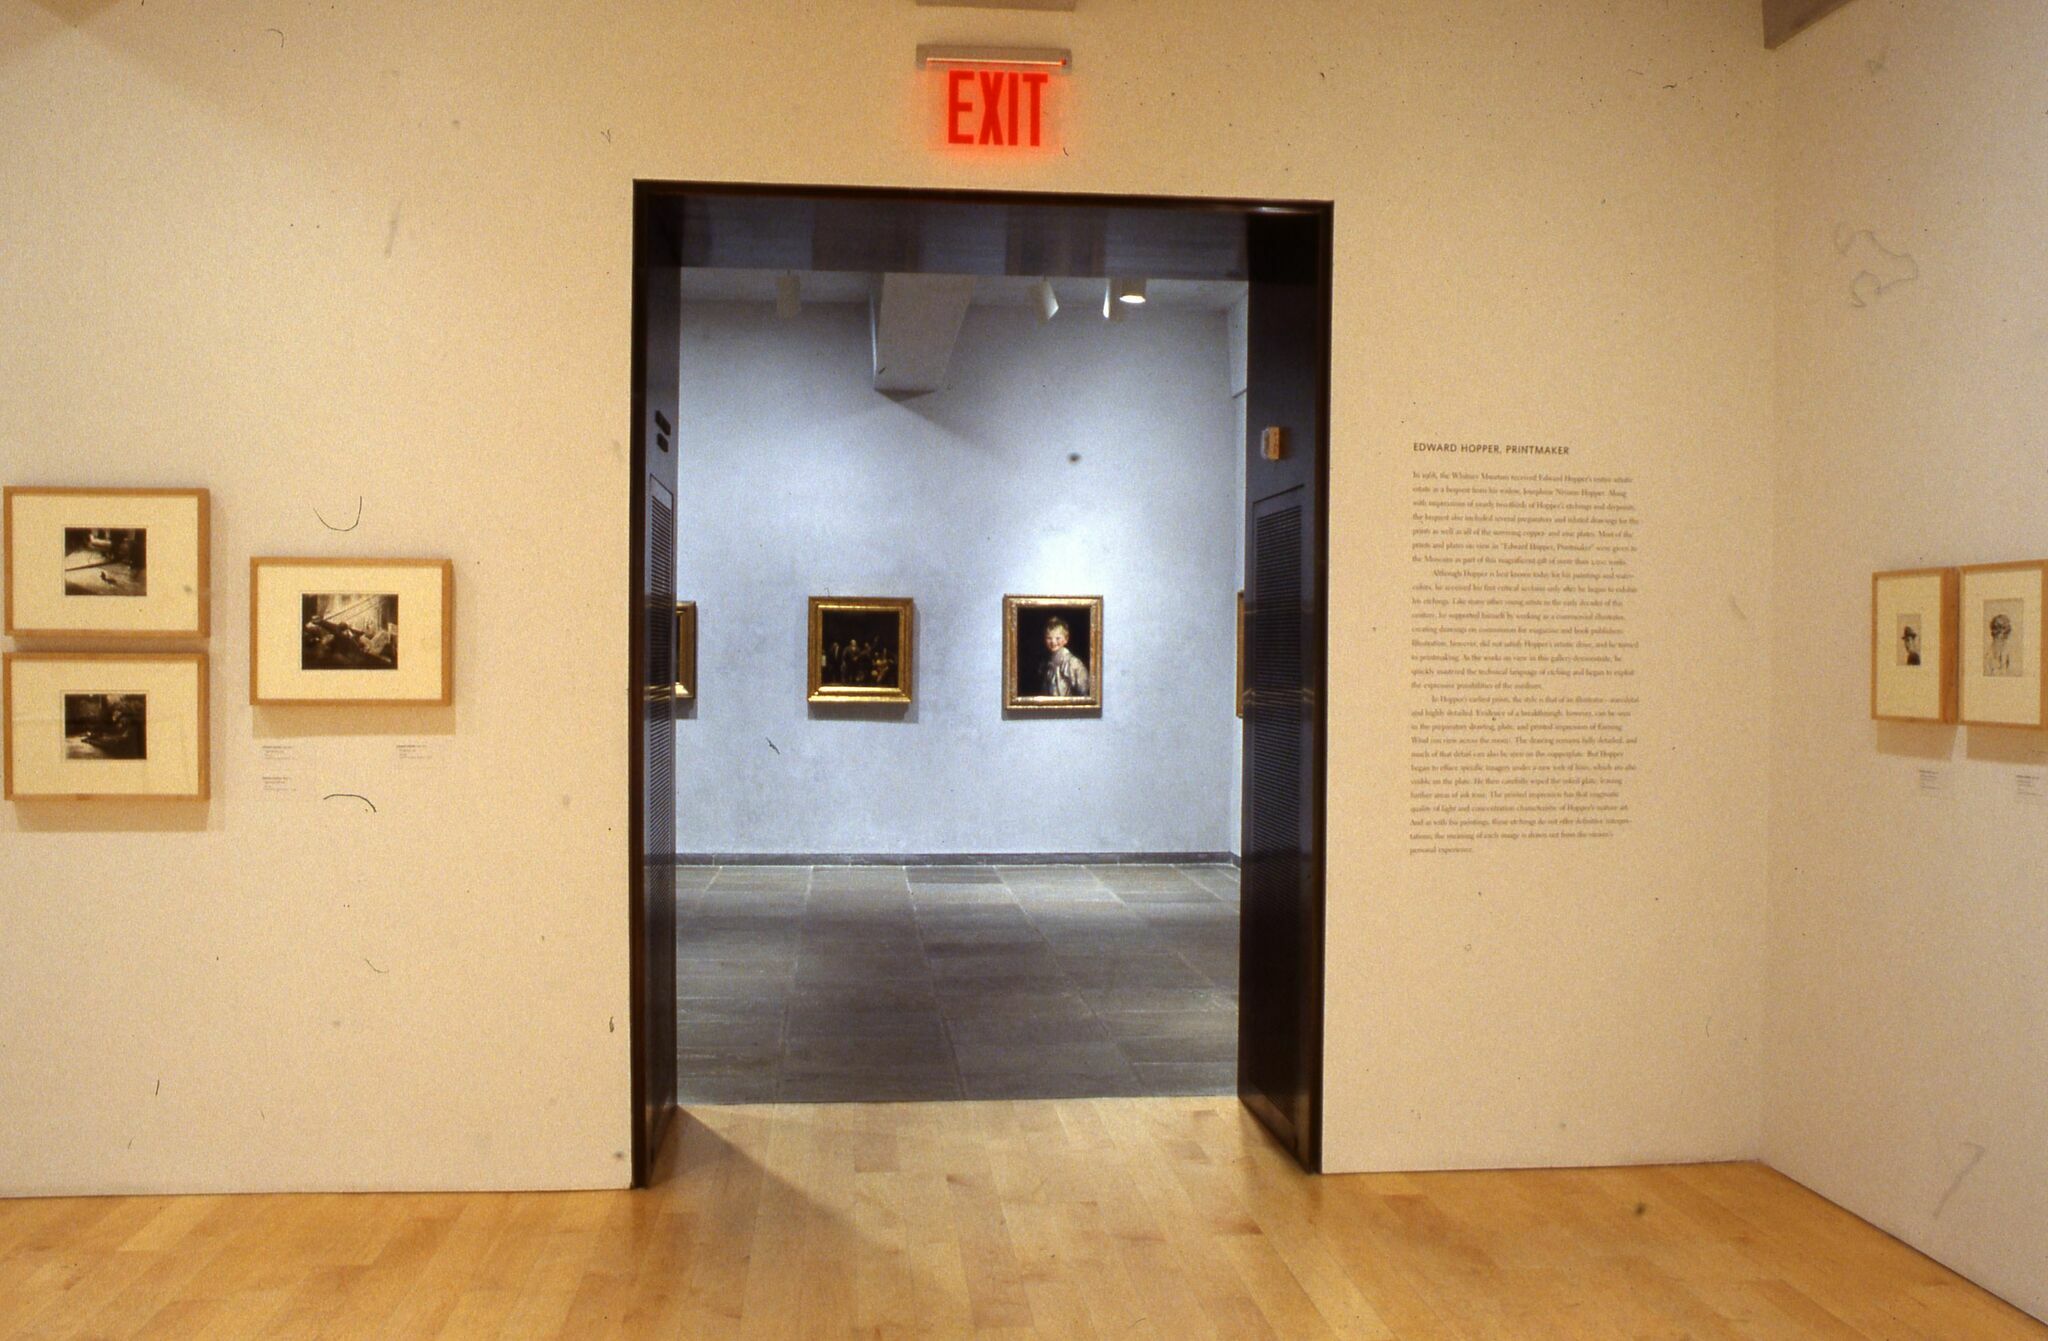 A gallery with wall text for Edward Hopper, Printmaker, alongside framed prints by Edward Hopper.